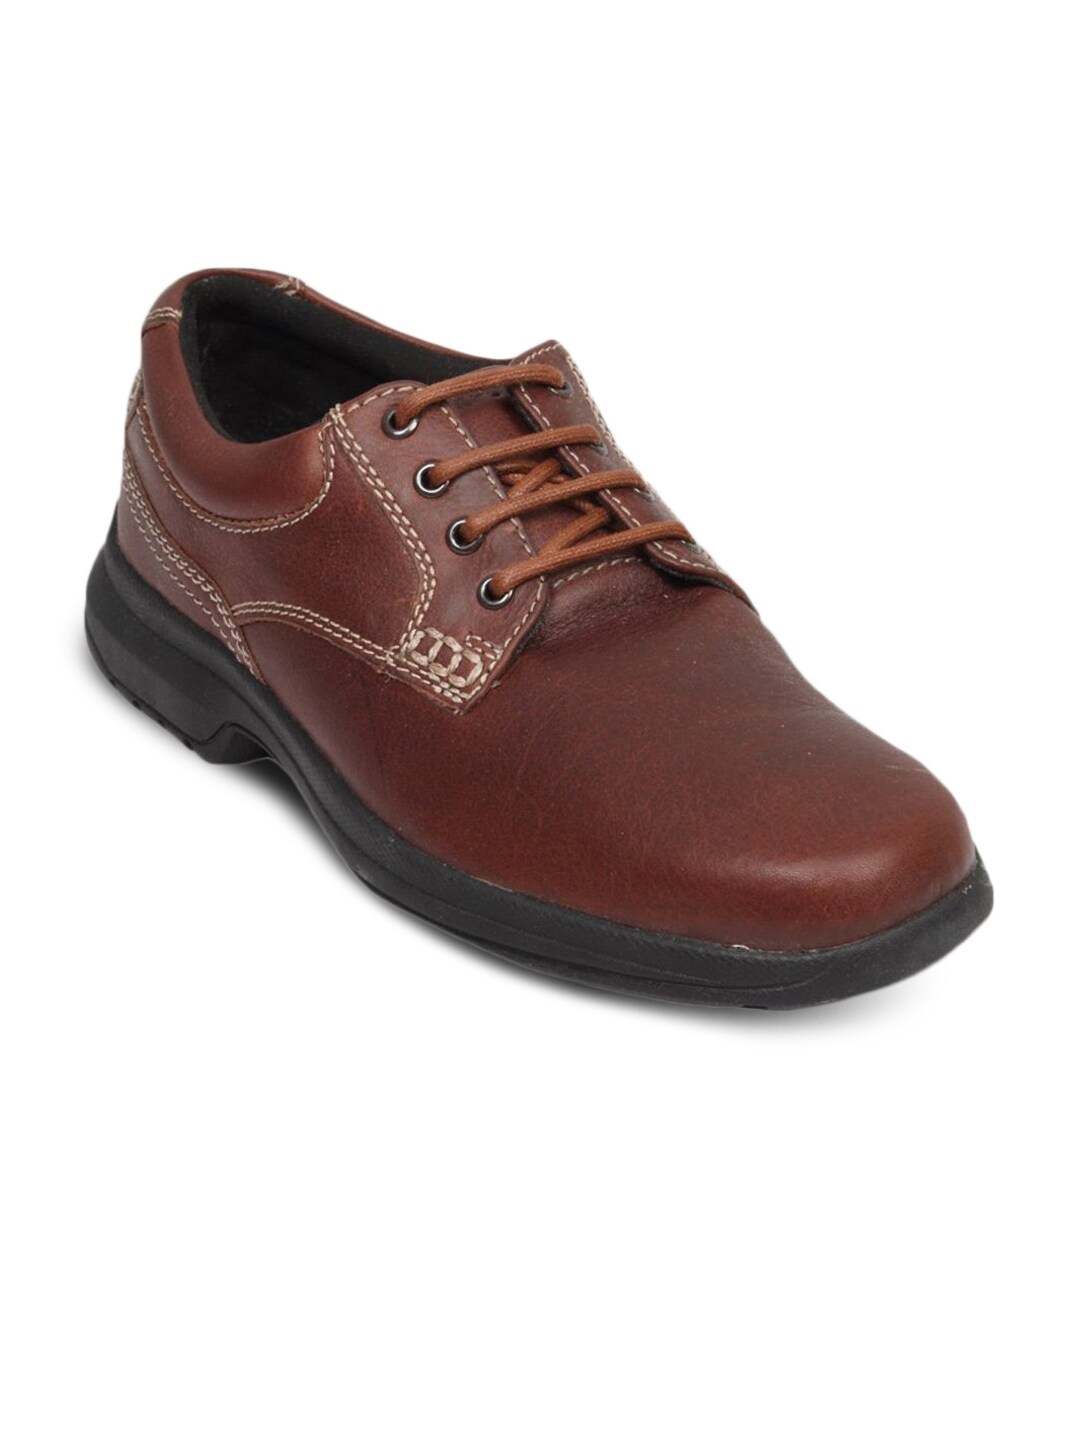 Rockport Men's Bindu India Medium Brown Shoe